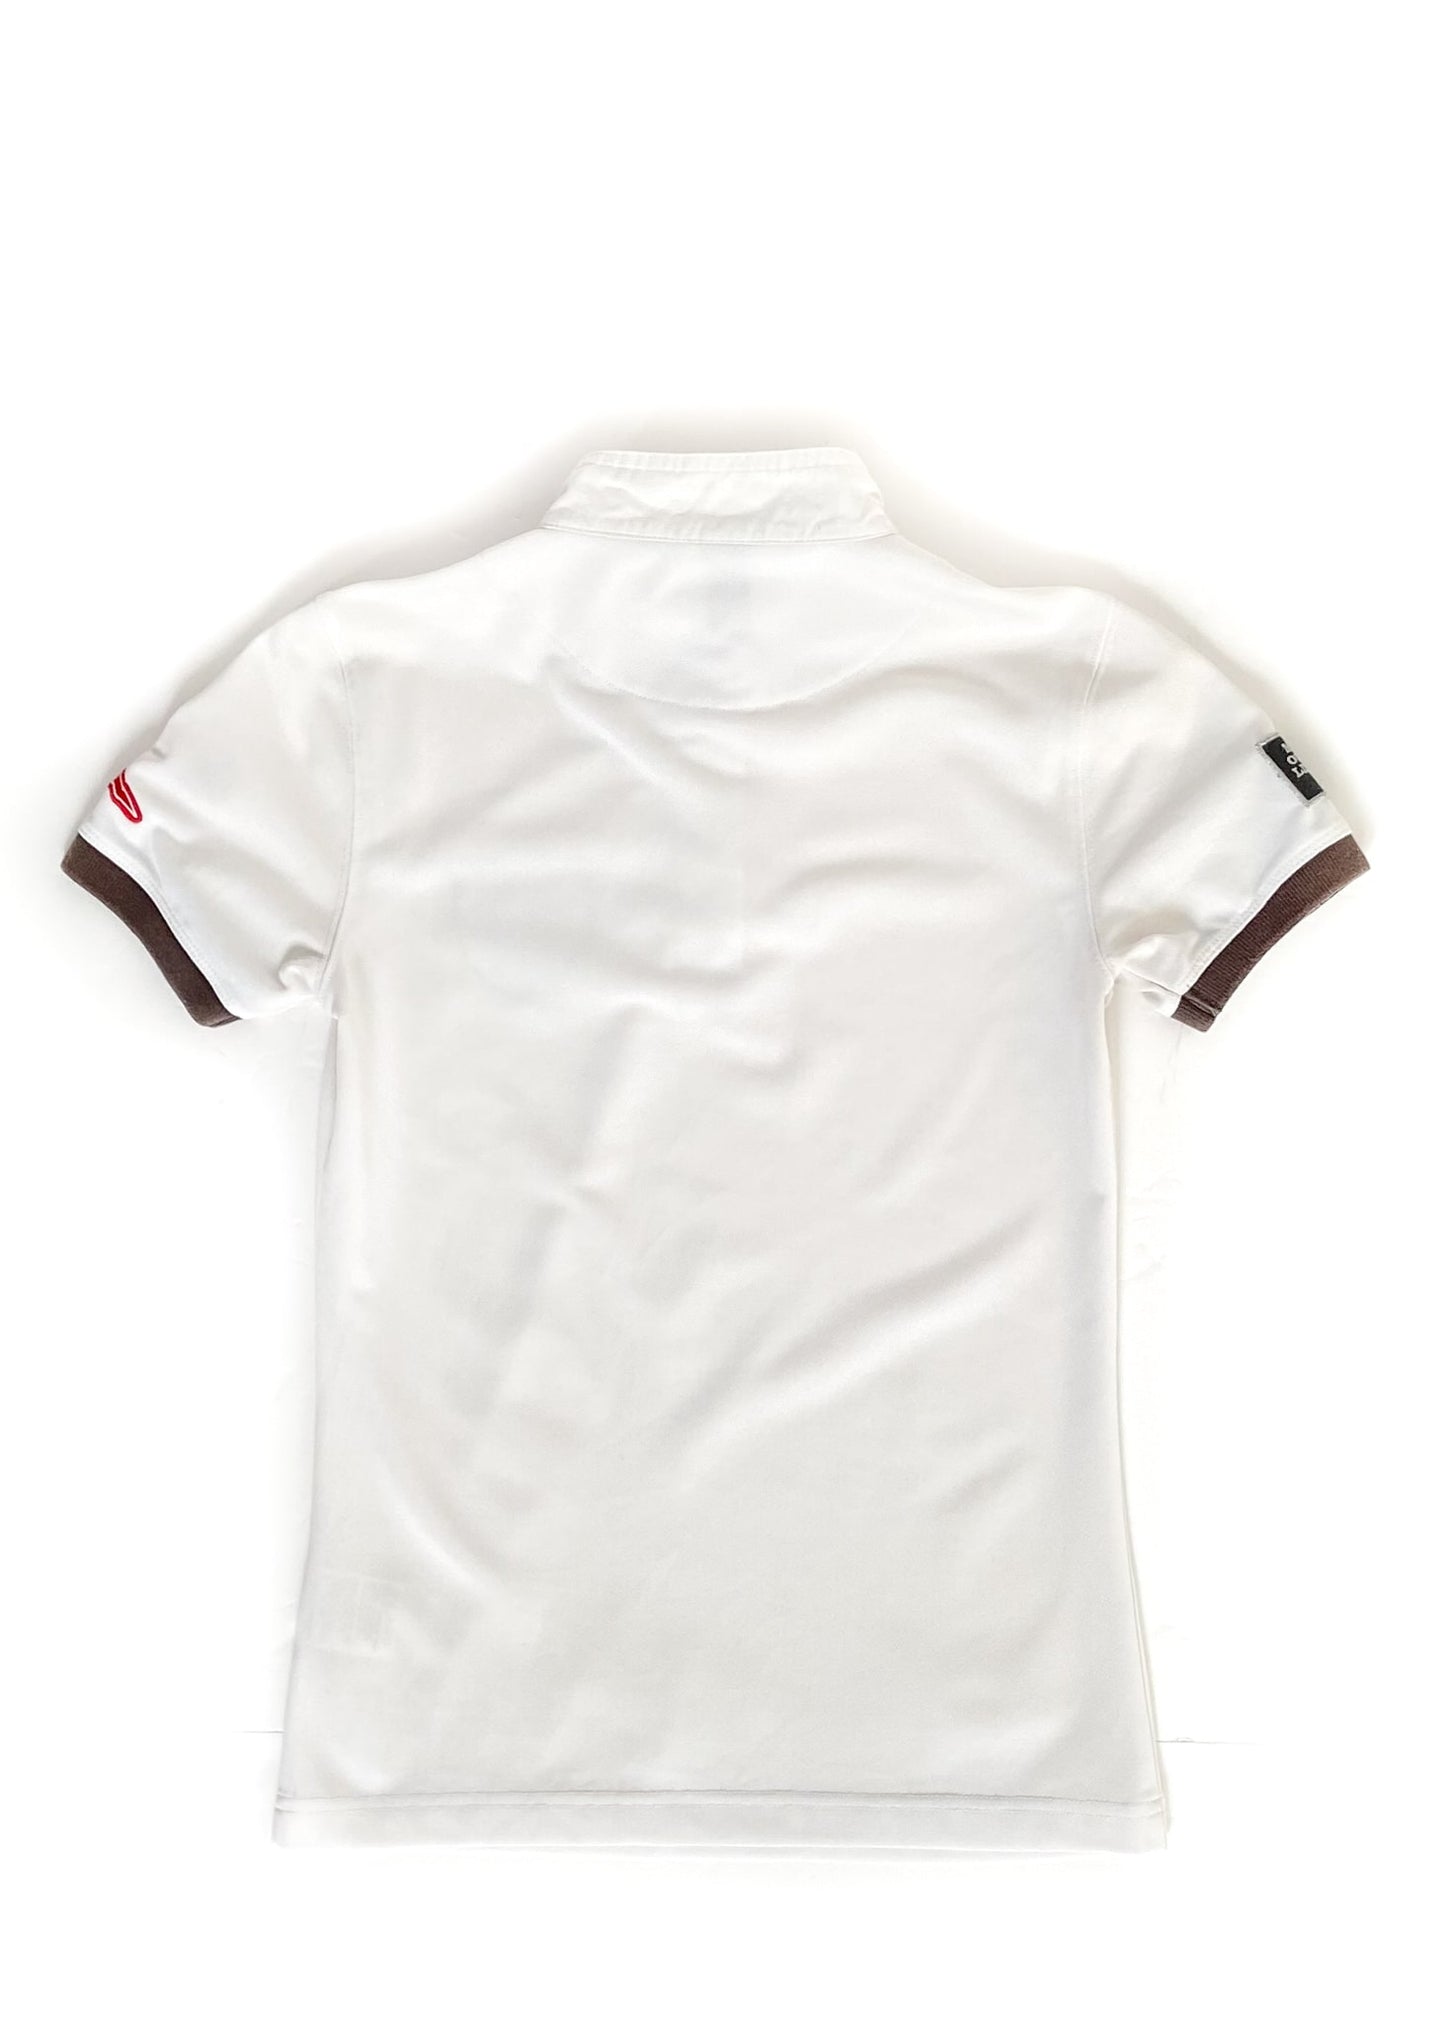 Horze Short Sleeve Competition Shirt - White - Women's XS